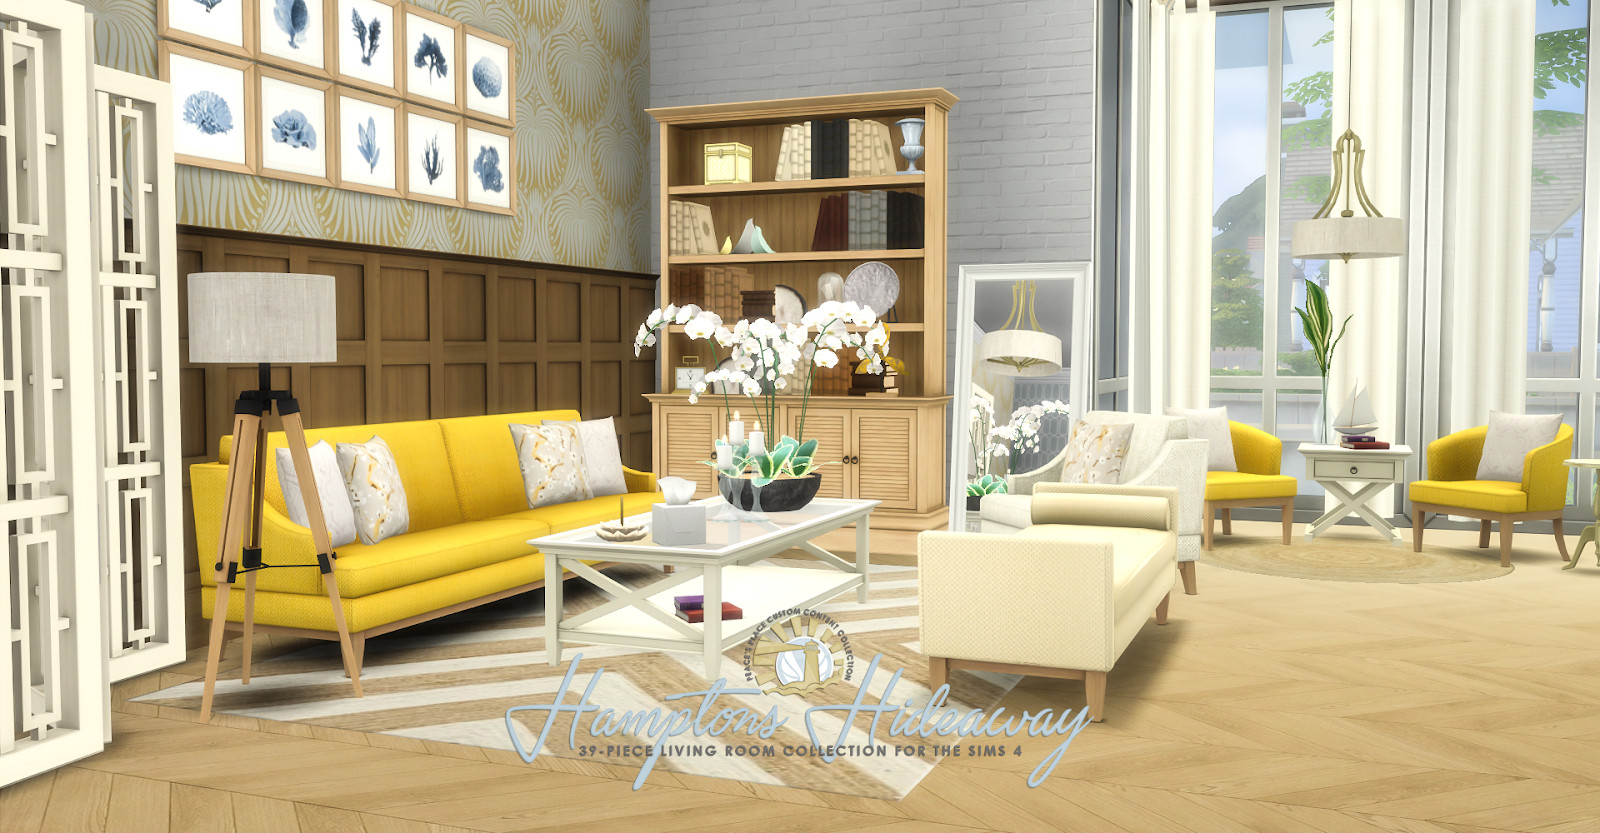 Sims 4 Living Room Ideas
 Simsational Designs Hamptons Hideaway Living Room Set